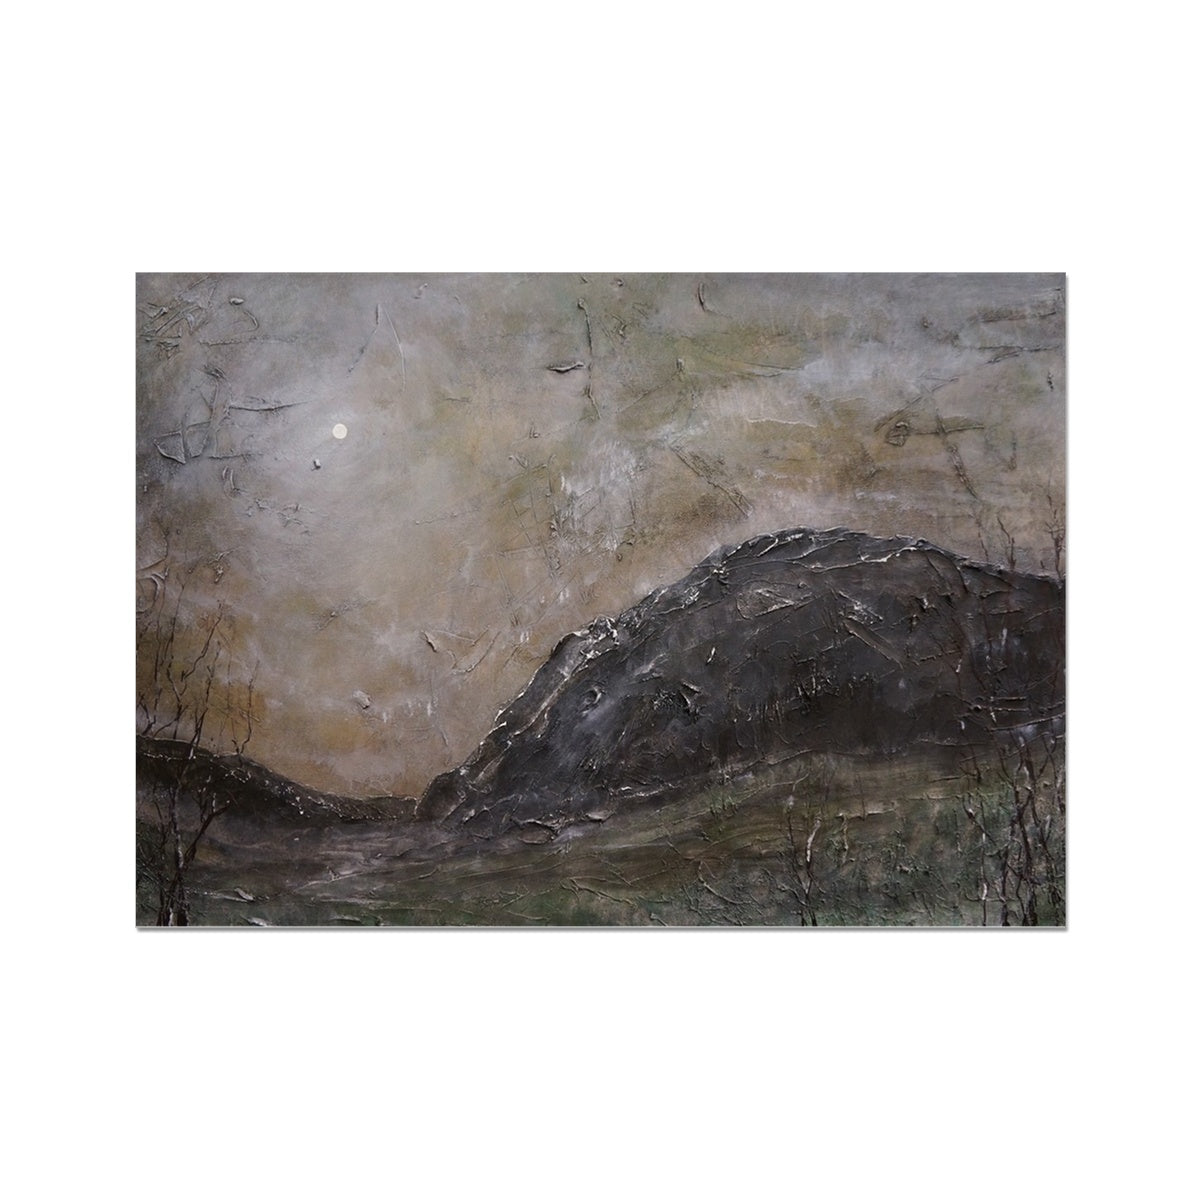 Glen Nevis Moonlight Painting | Fine Art Prints From Scotland-Fine art-Scottish Lochs & Mountains Art Gallery-A2 Landscape-Paintings, Prints, Homeware, Art Gifts From Scotland By Scottish Artist Kevin Hunter